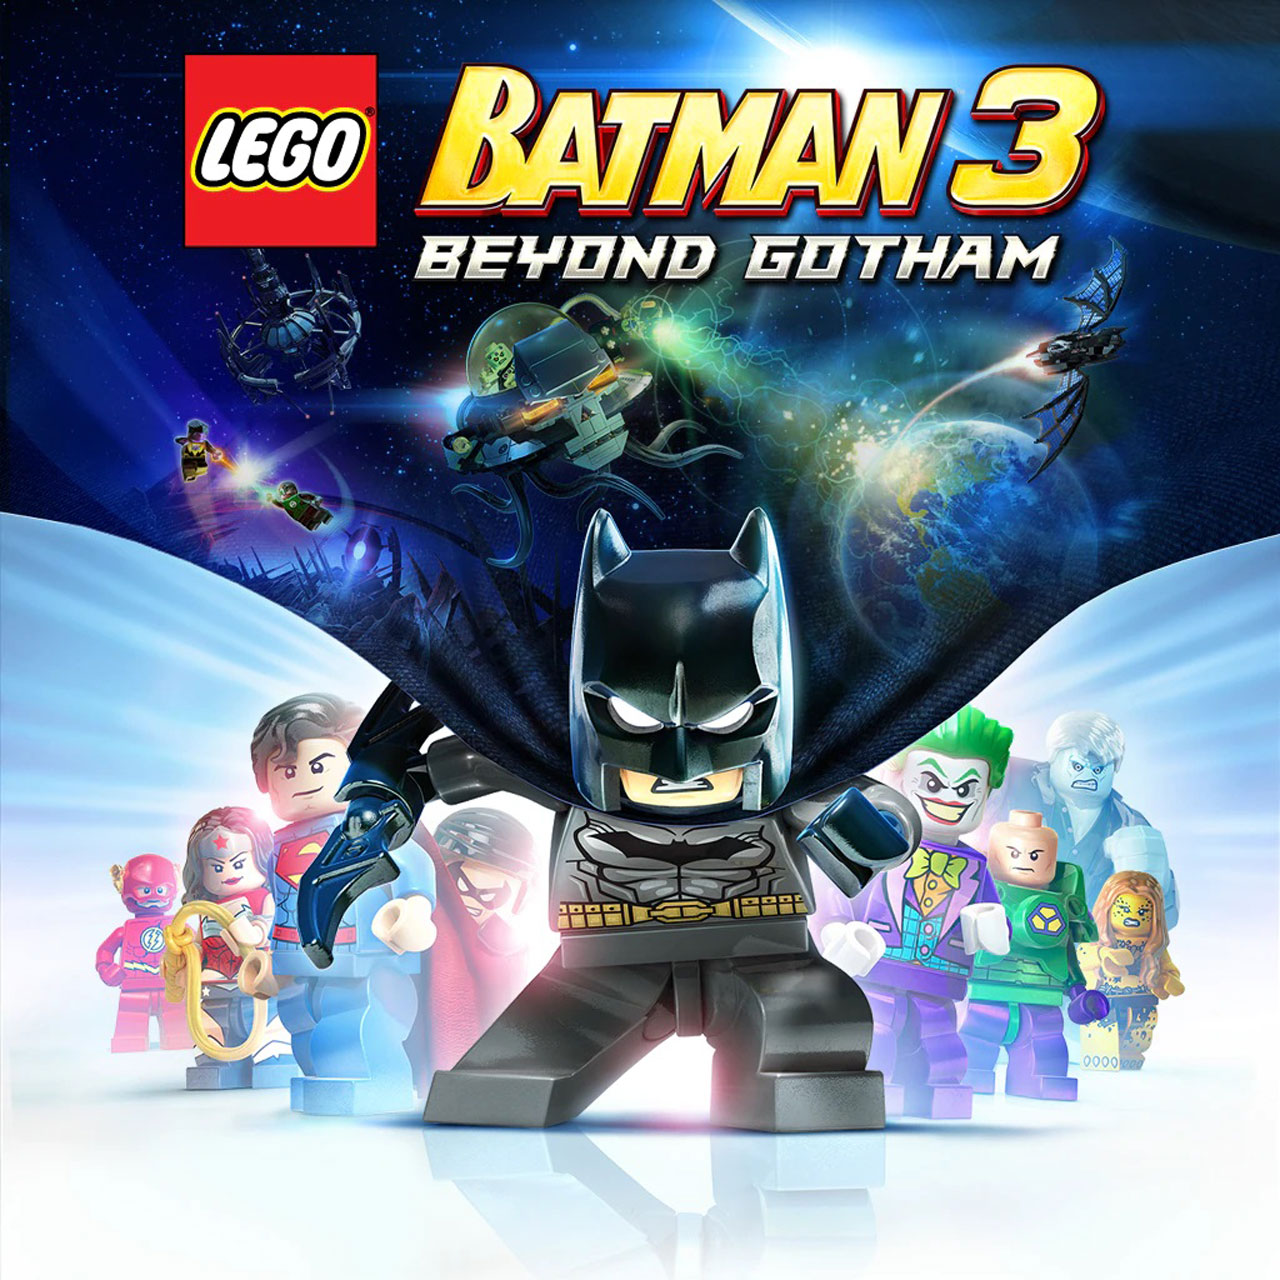 LEGO Batman 3 Beyond Gotham xbox 14 - خرید بازی LEGO Batman 3 Beyond Gotham برای Xbox